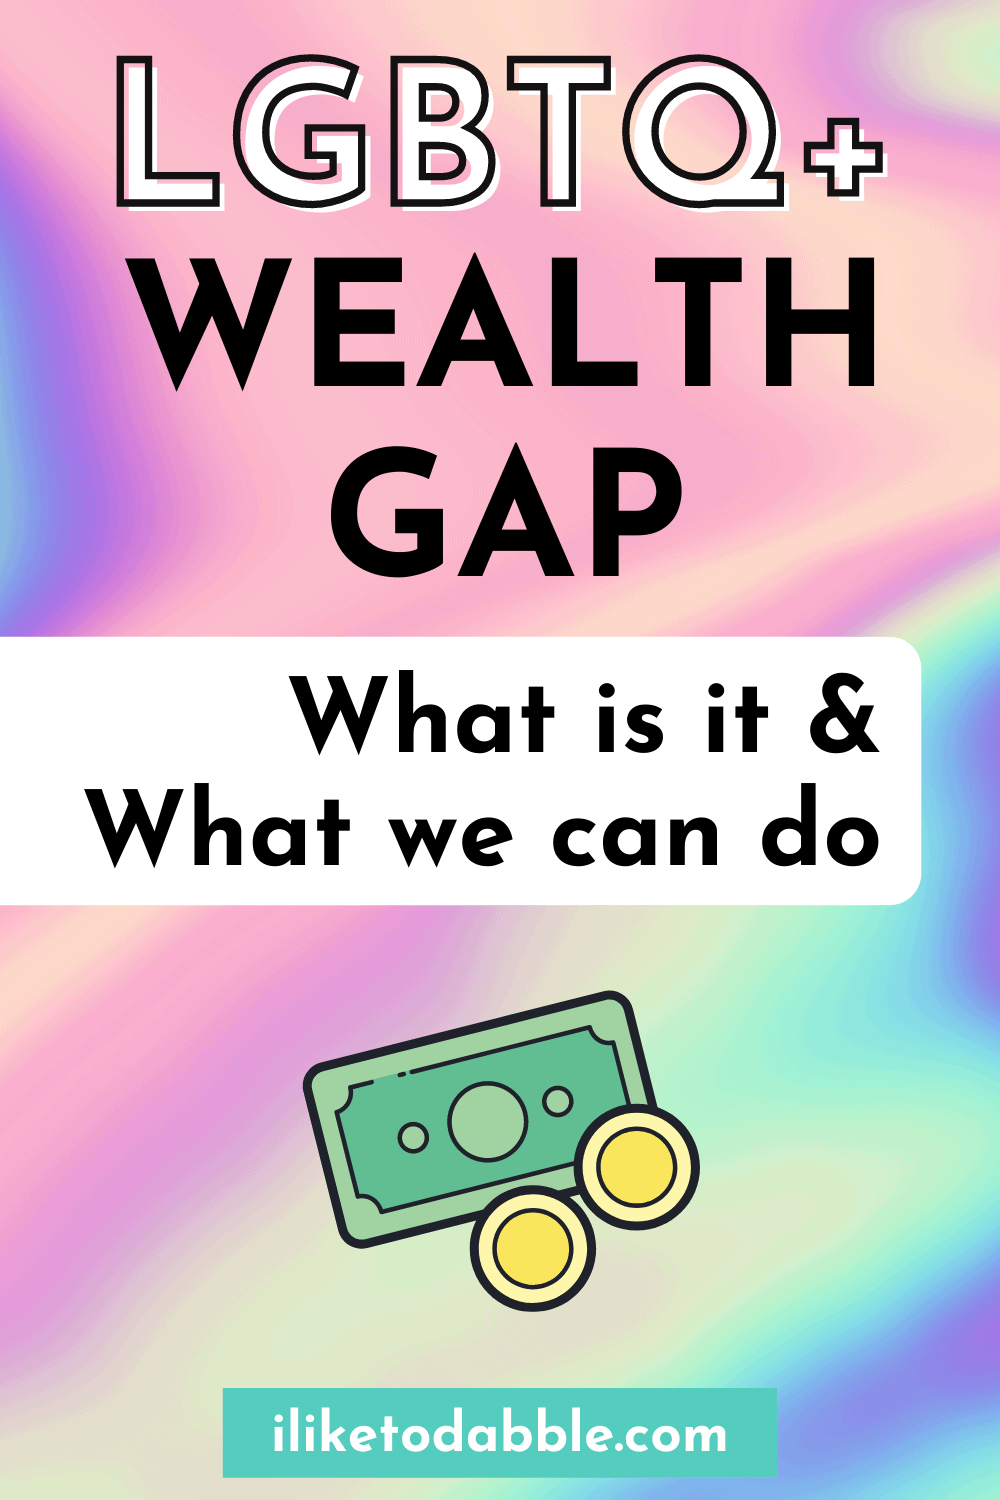 lgbtq wealth gap pinnable image